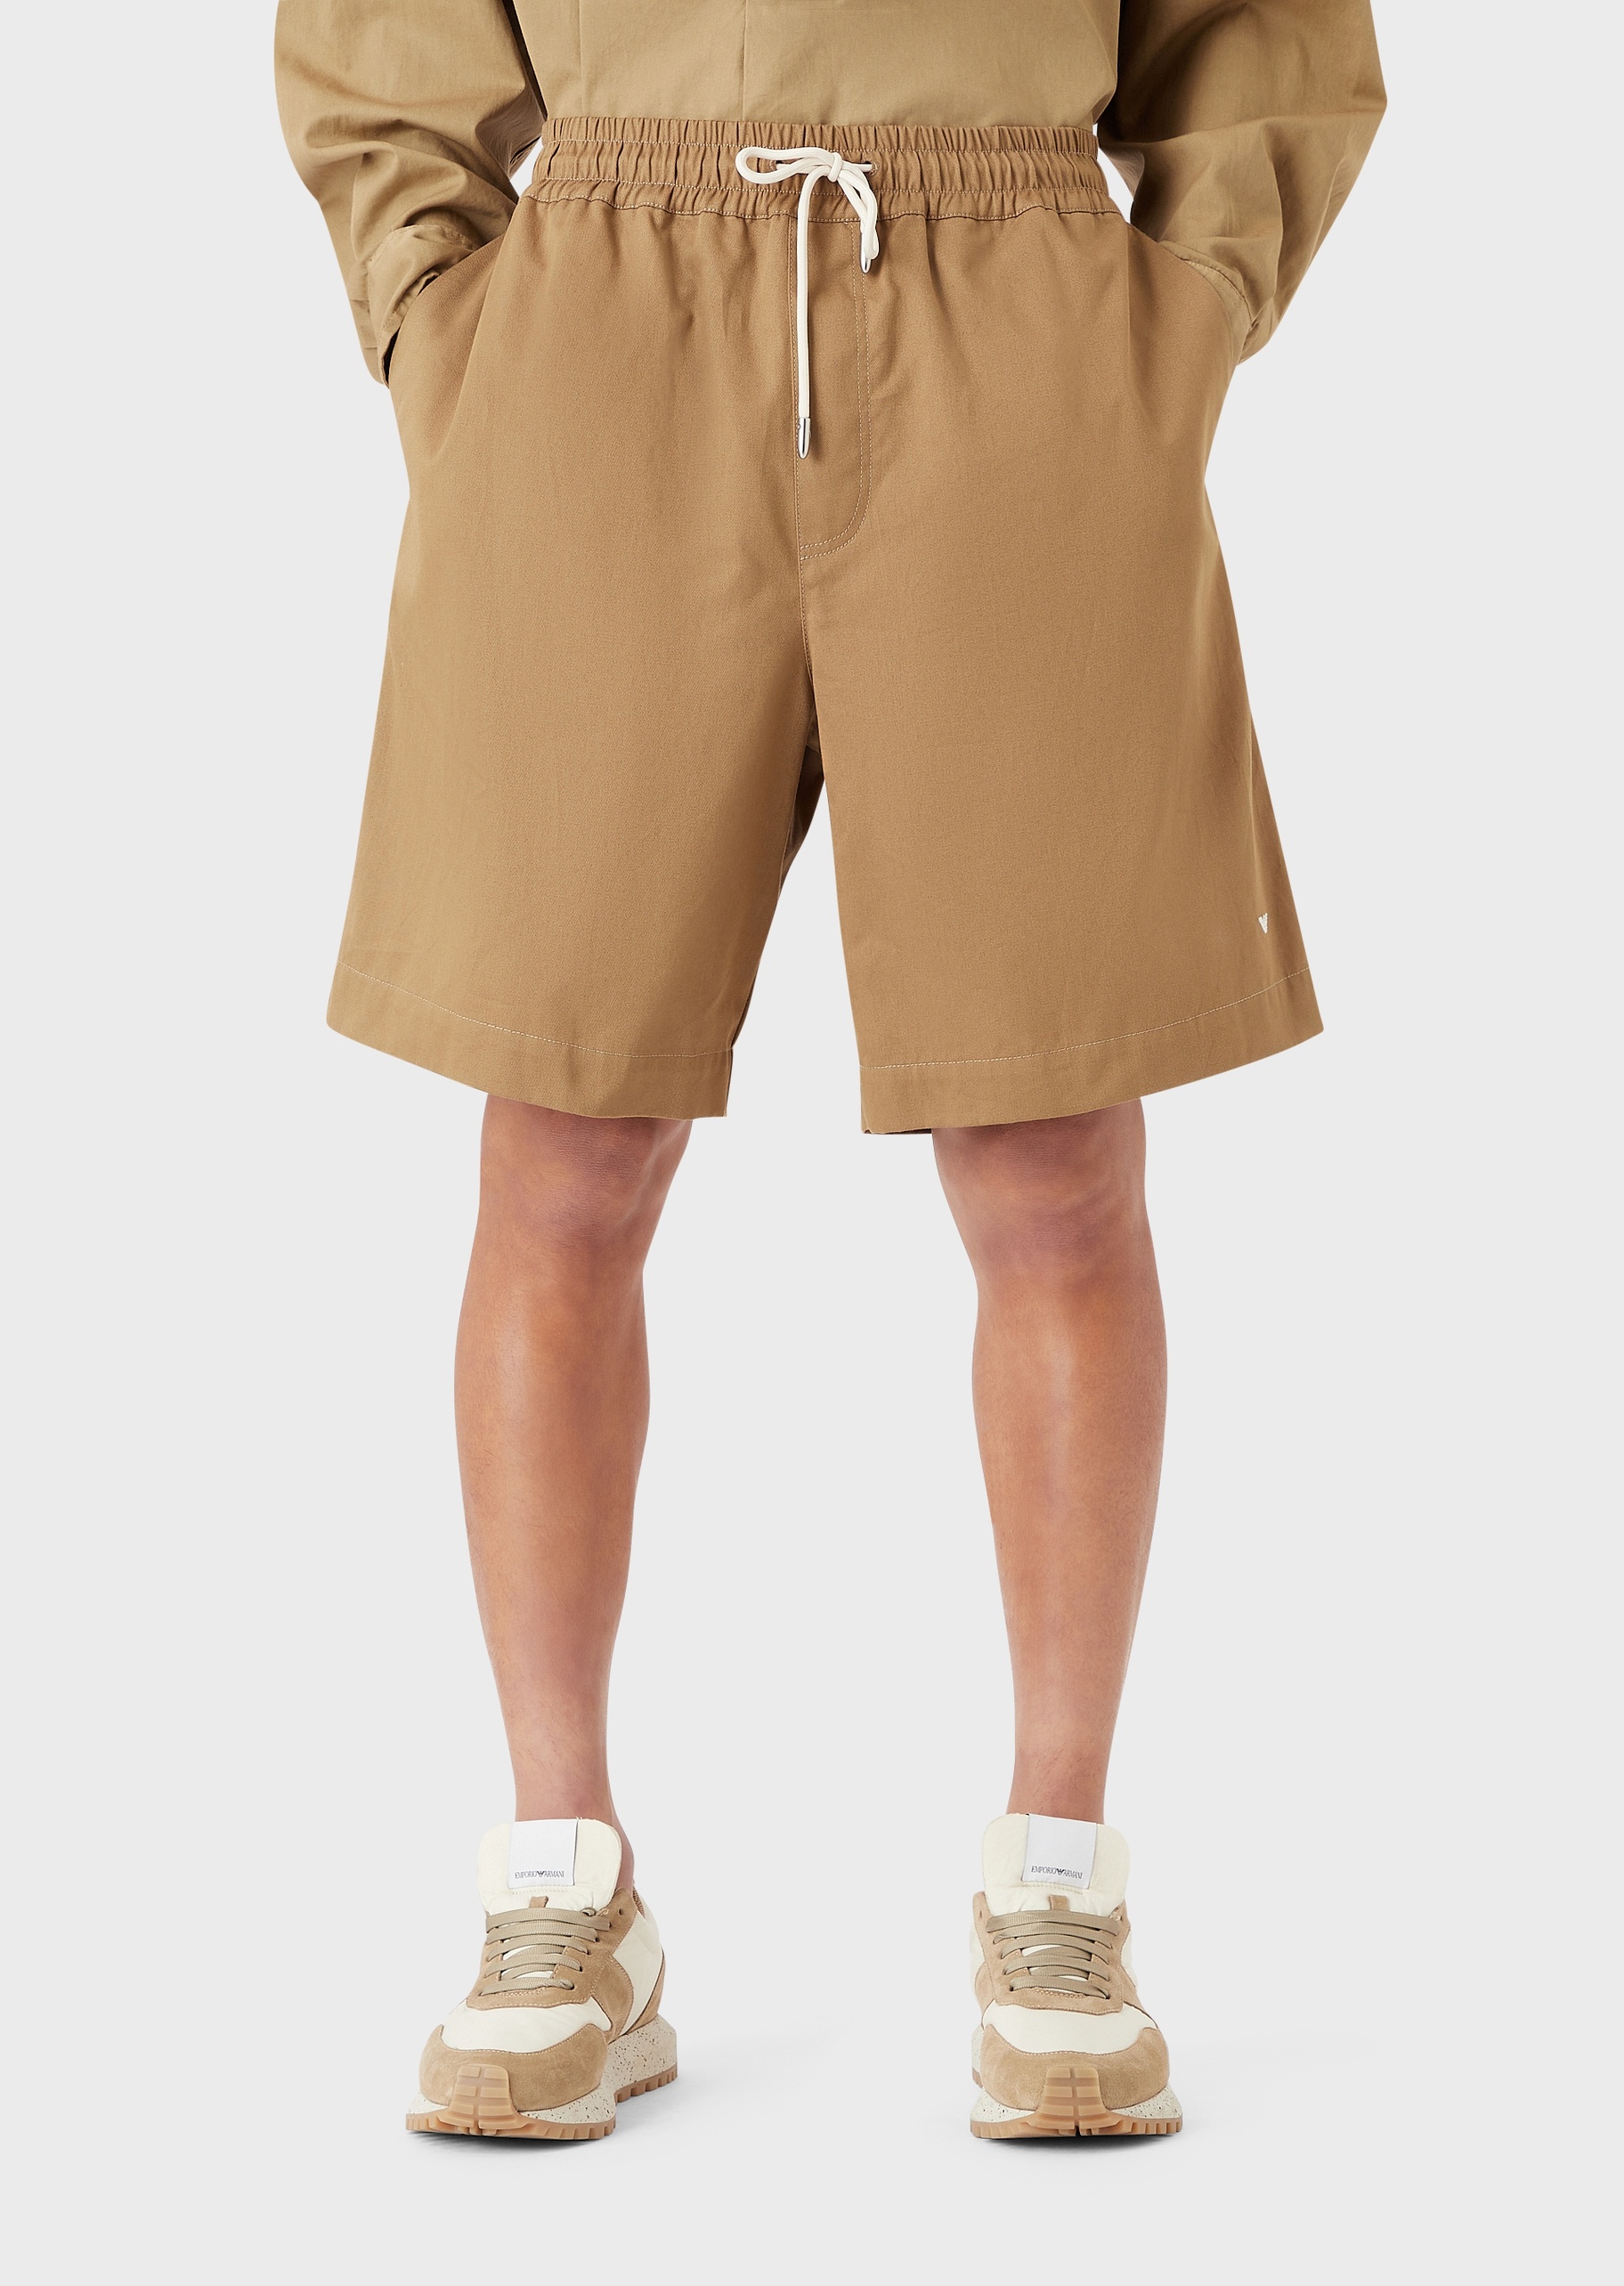 Emporio Armani 可持续系列抽绳百慕大短裤